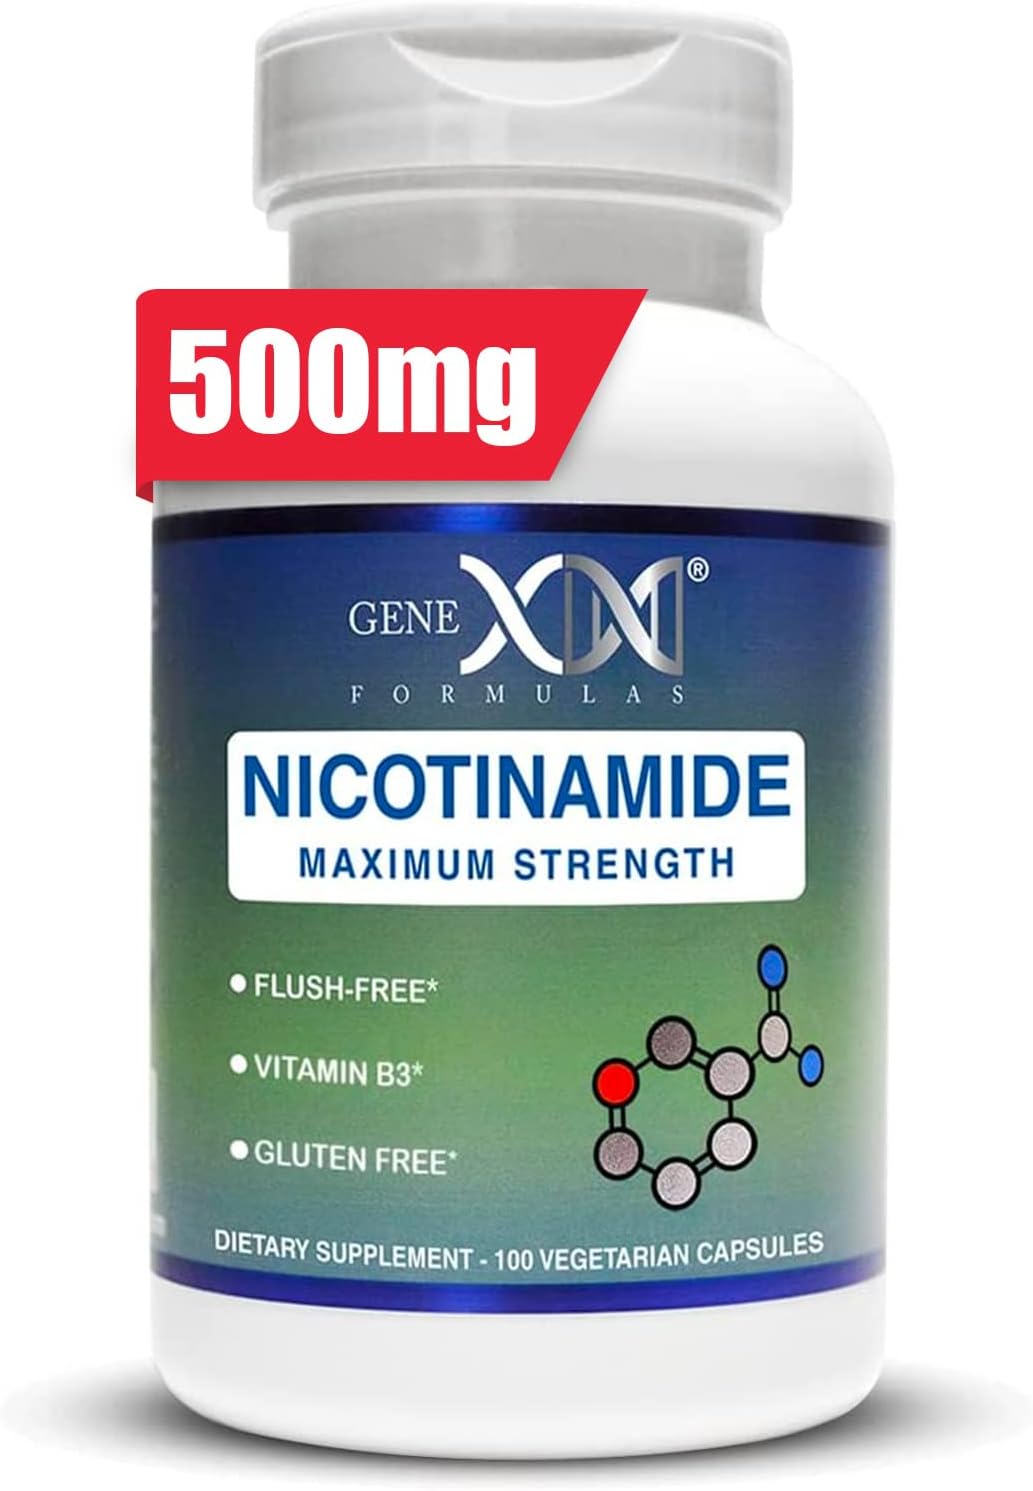 Genex Formulas - Nicotinamide 500mg Vitamin B3 Flush Free Niacin Capsules for Healthy Skin - Niacinamide Supplement Pills Help Produce Keratin  Support Skin Cell Health  Energy - (100 Capsules)